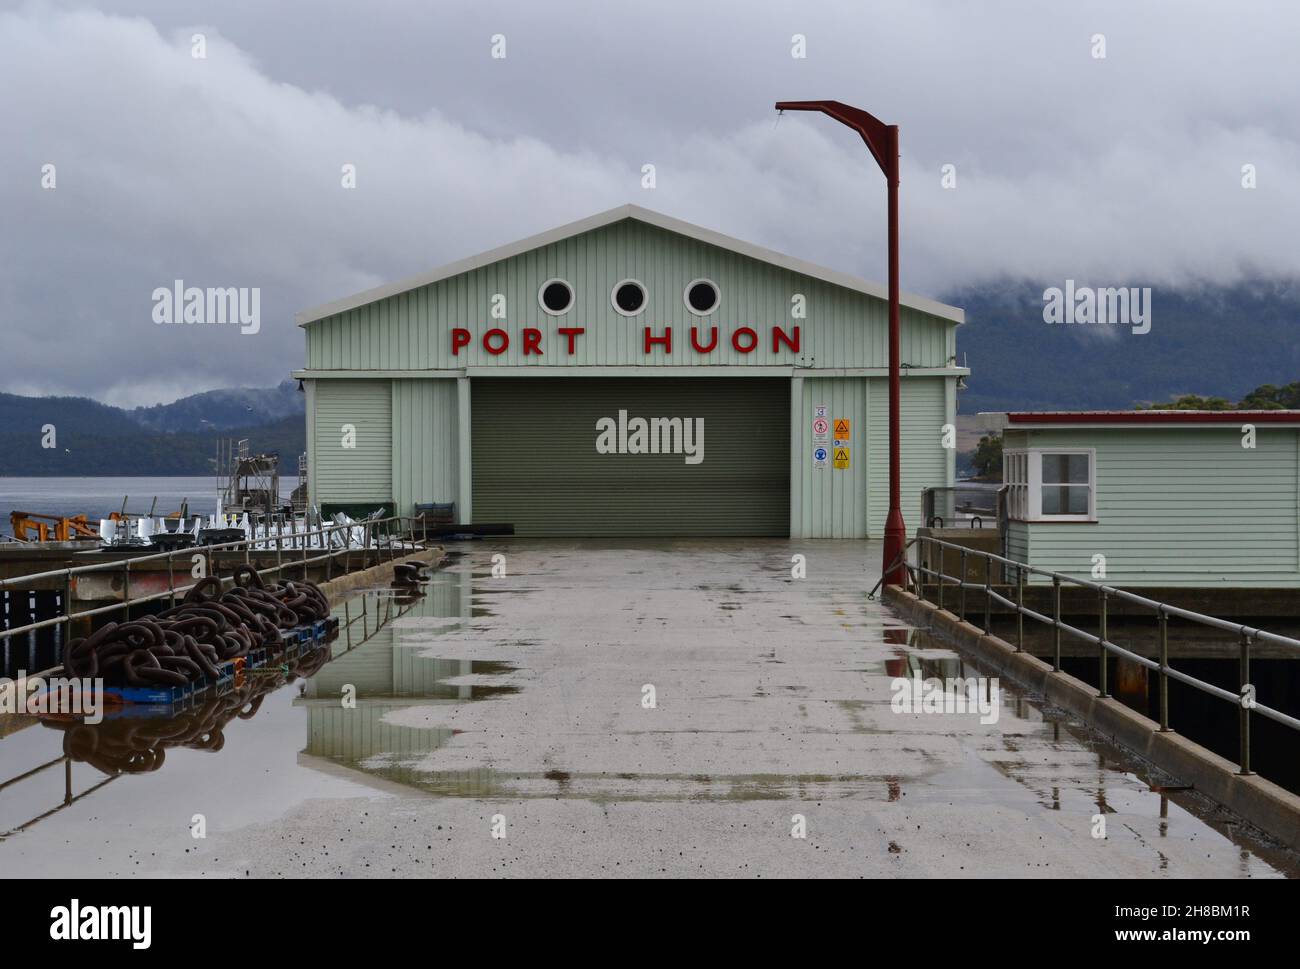 Port huon, tasmania hi-res stock photography and images - Alamy